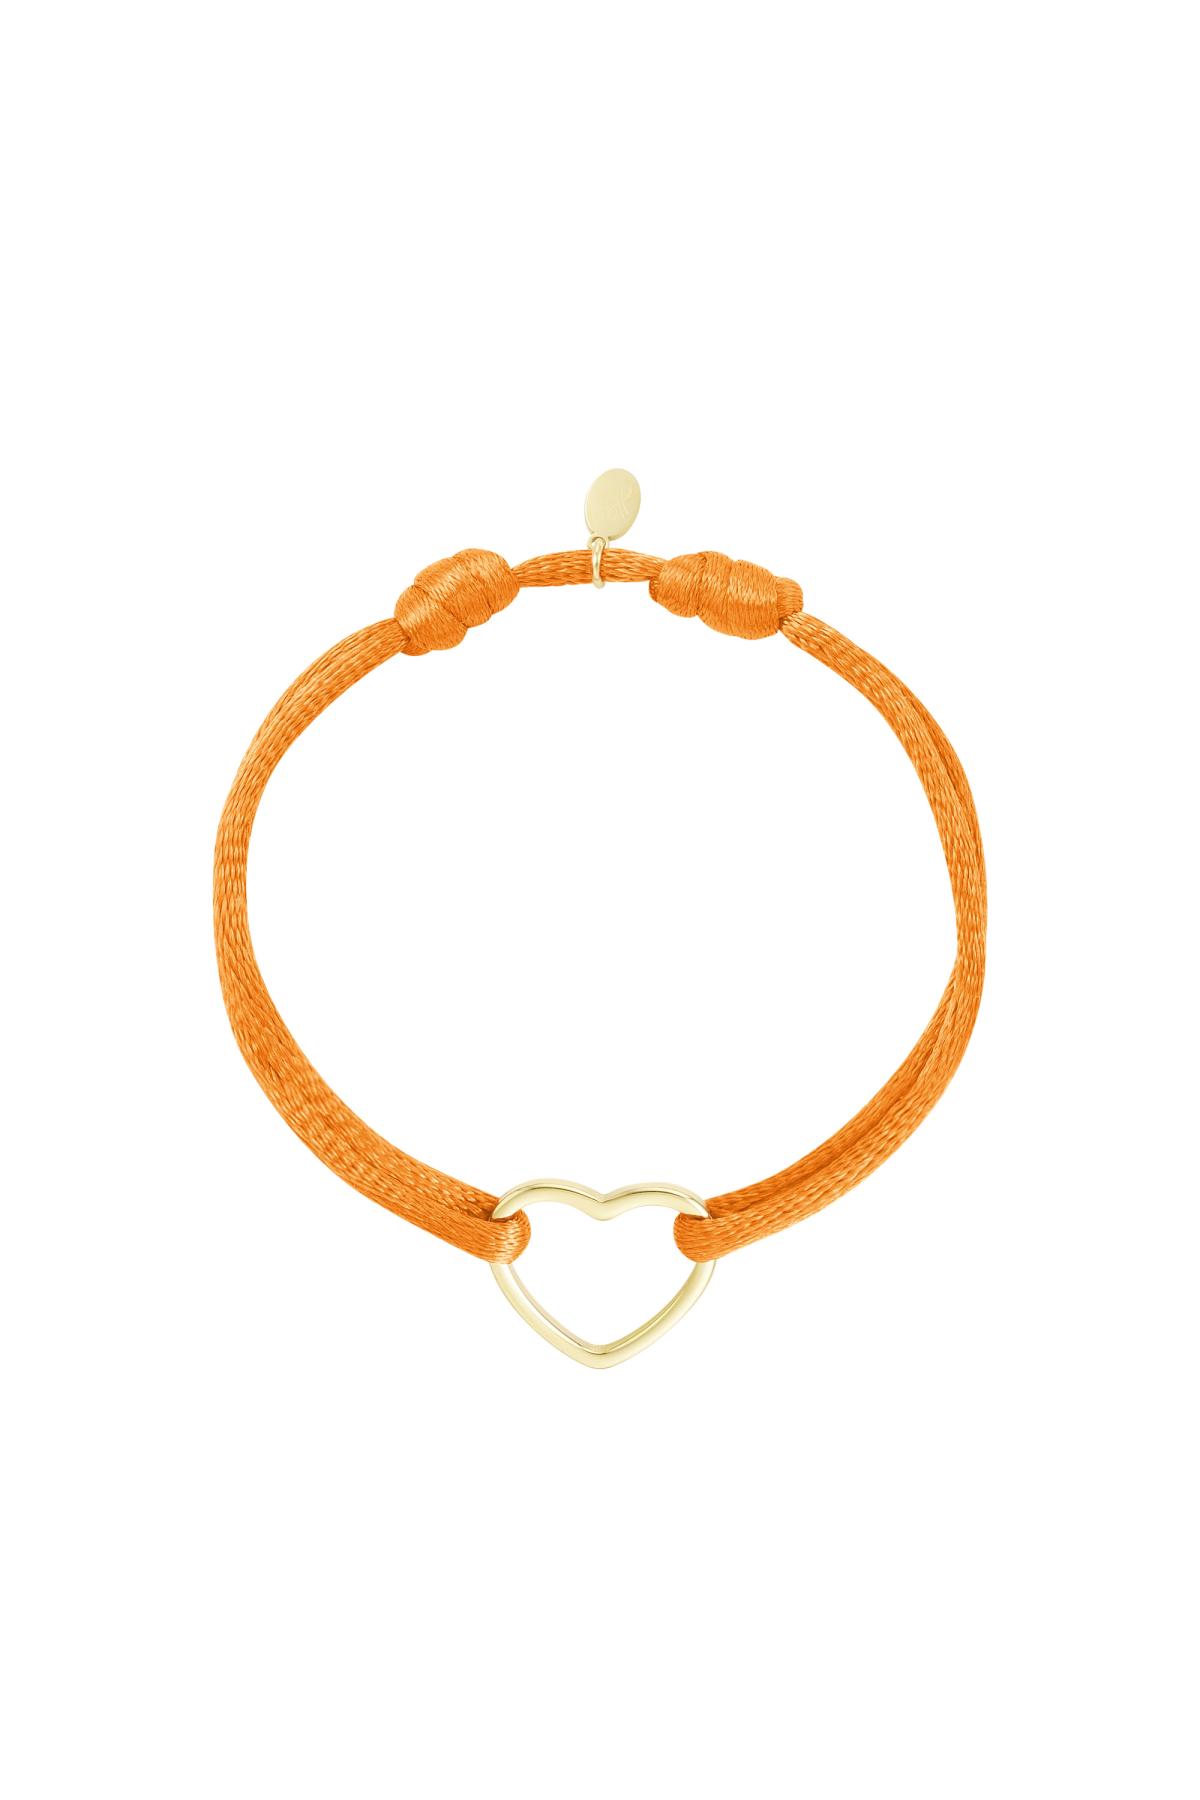 Fabric bracelet heart Orange & Gold Stainless Steel 